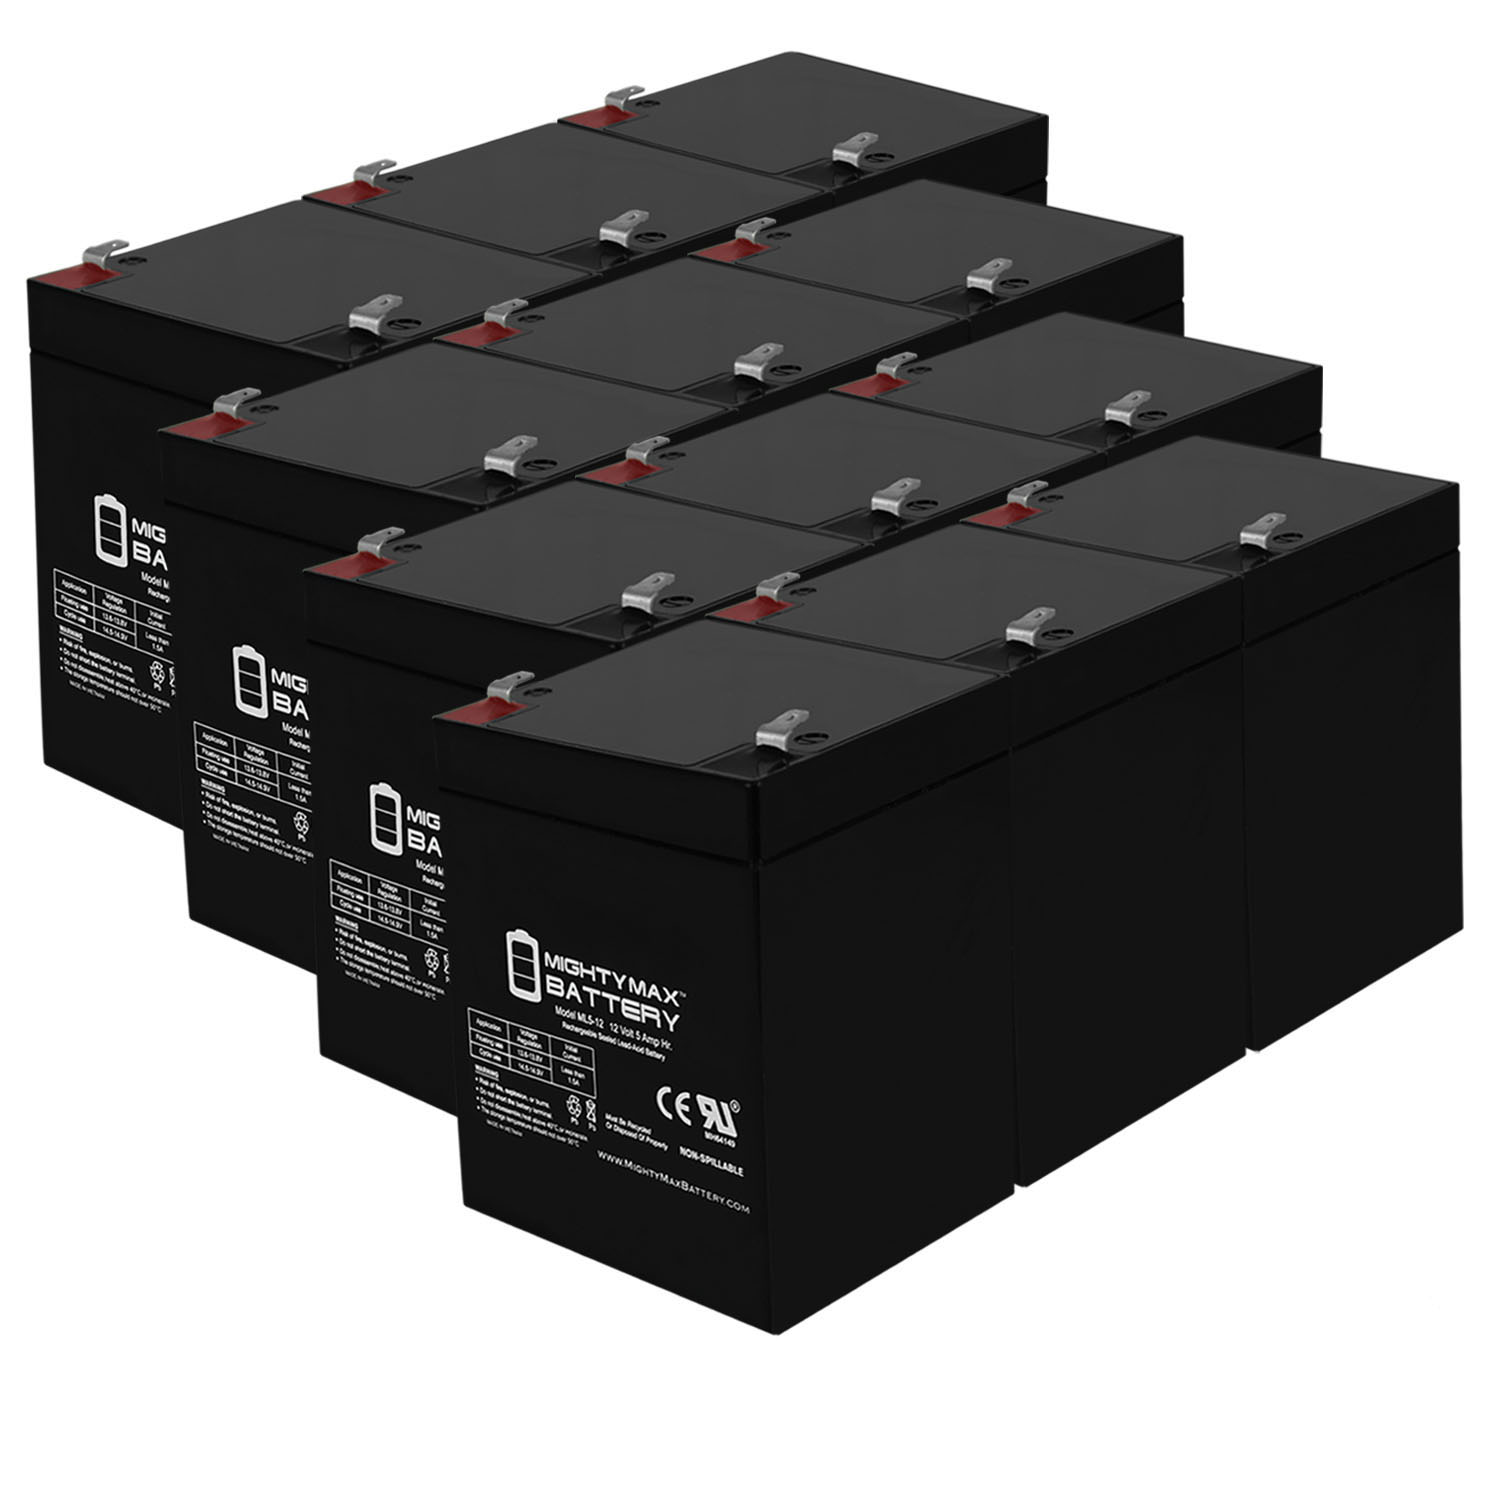 12V 5AH SLA Replacement Battery for KMG-5-12 - 12 Pack